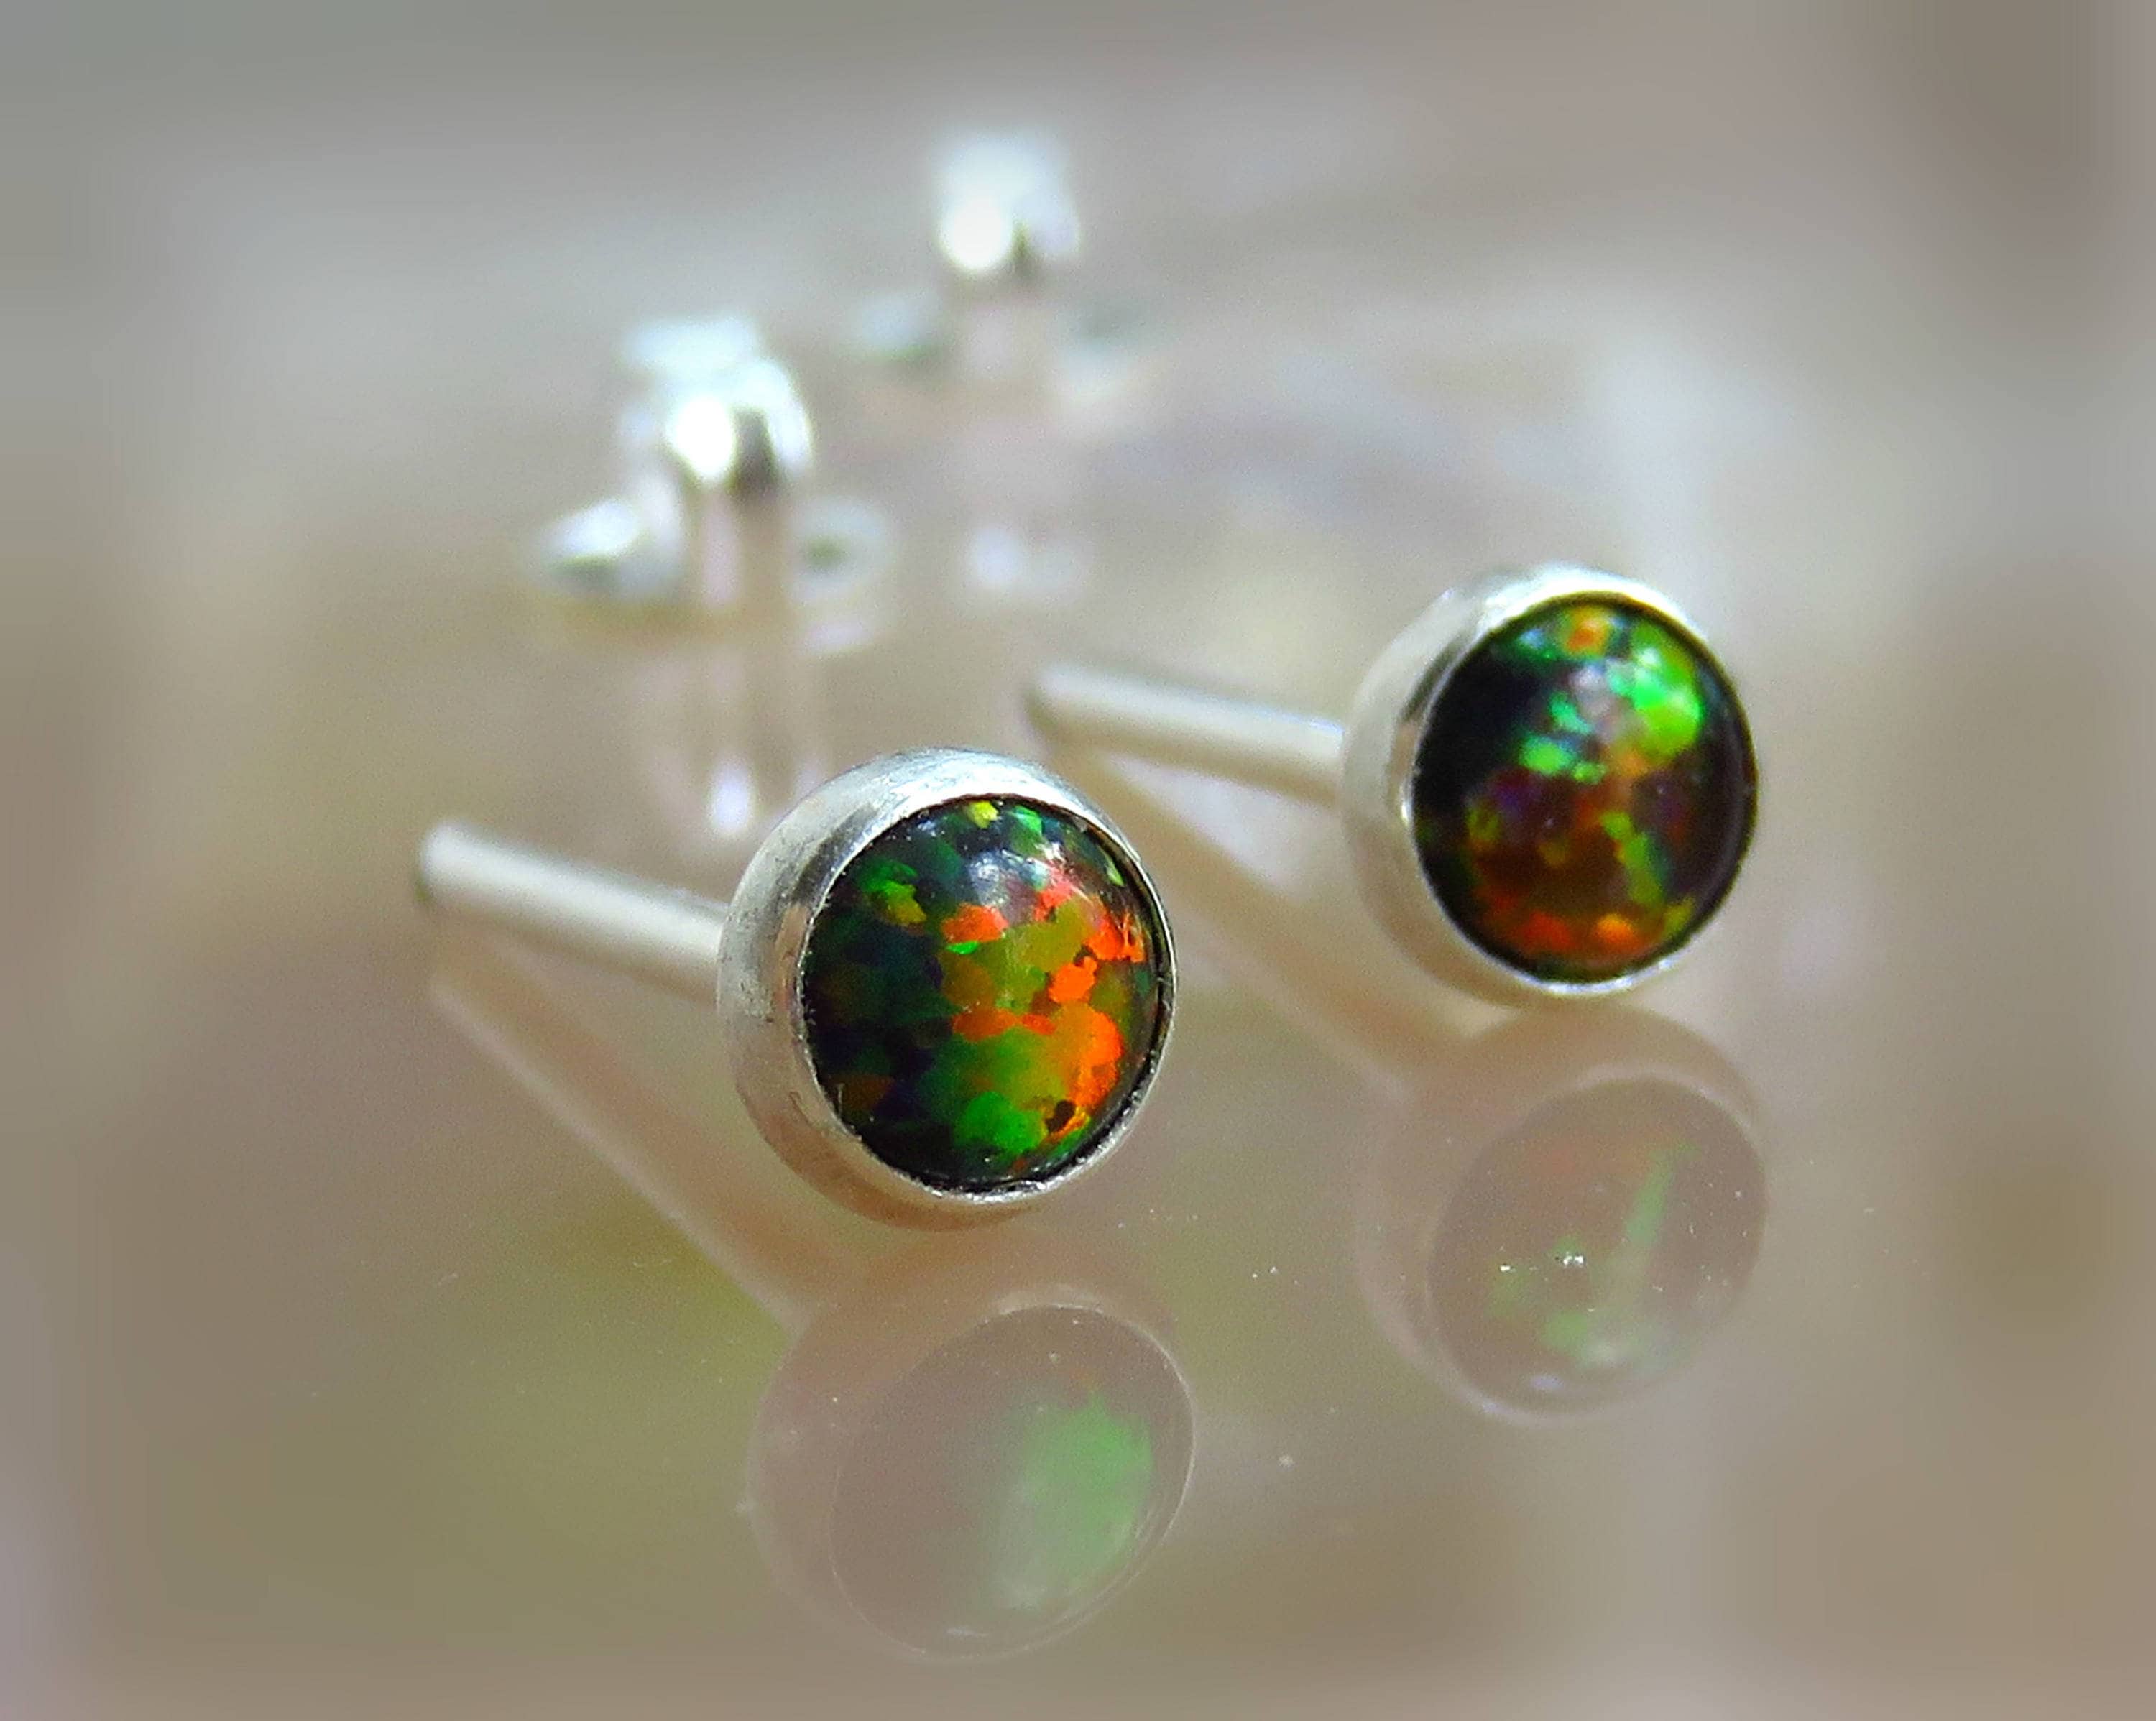 Buy Genuine Fire Opal Earrings October Birthstone Jewelry Online in India   Etsy